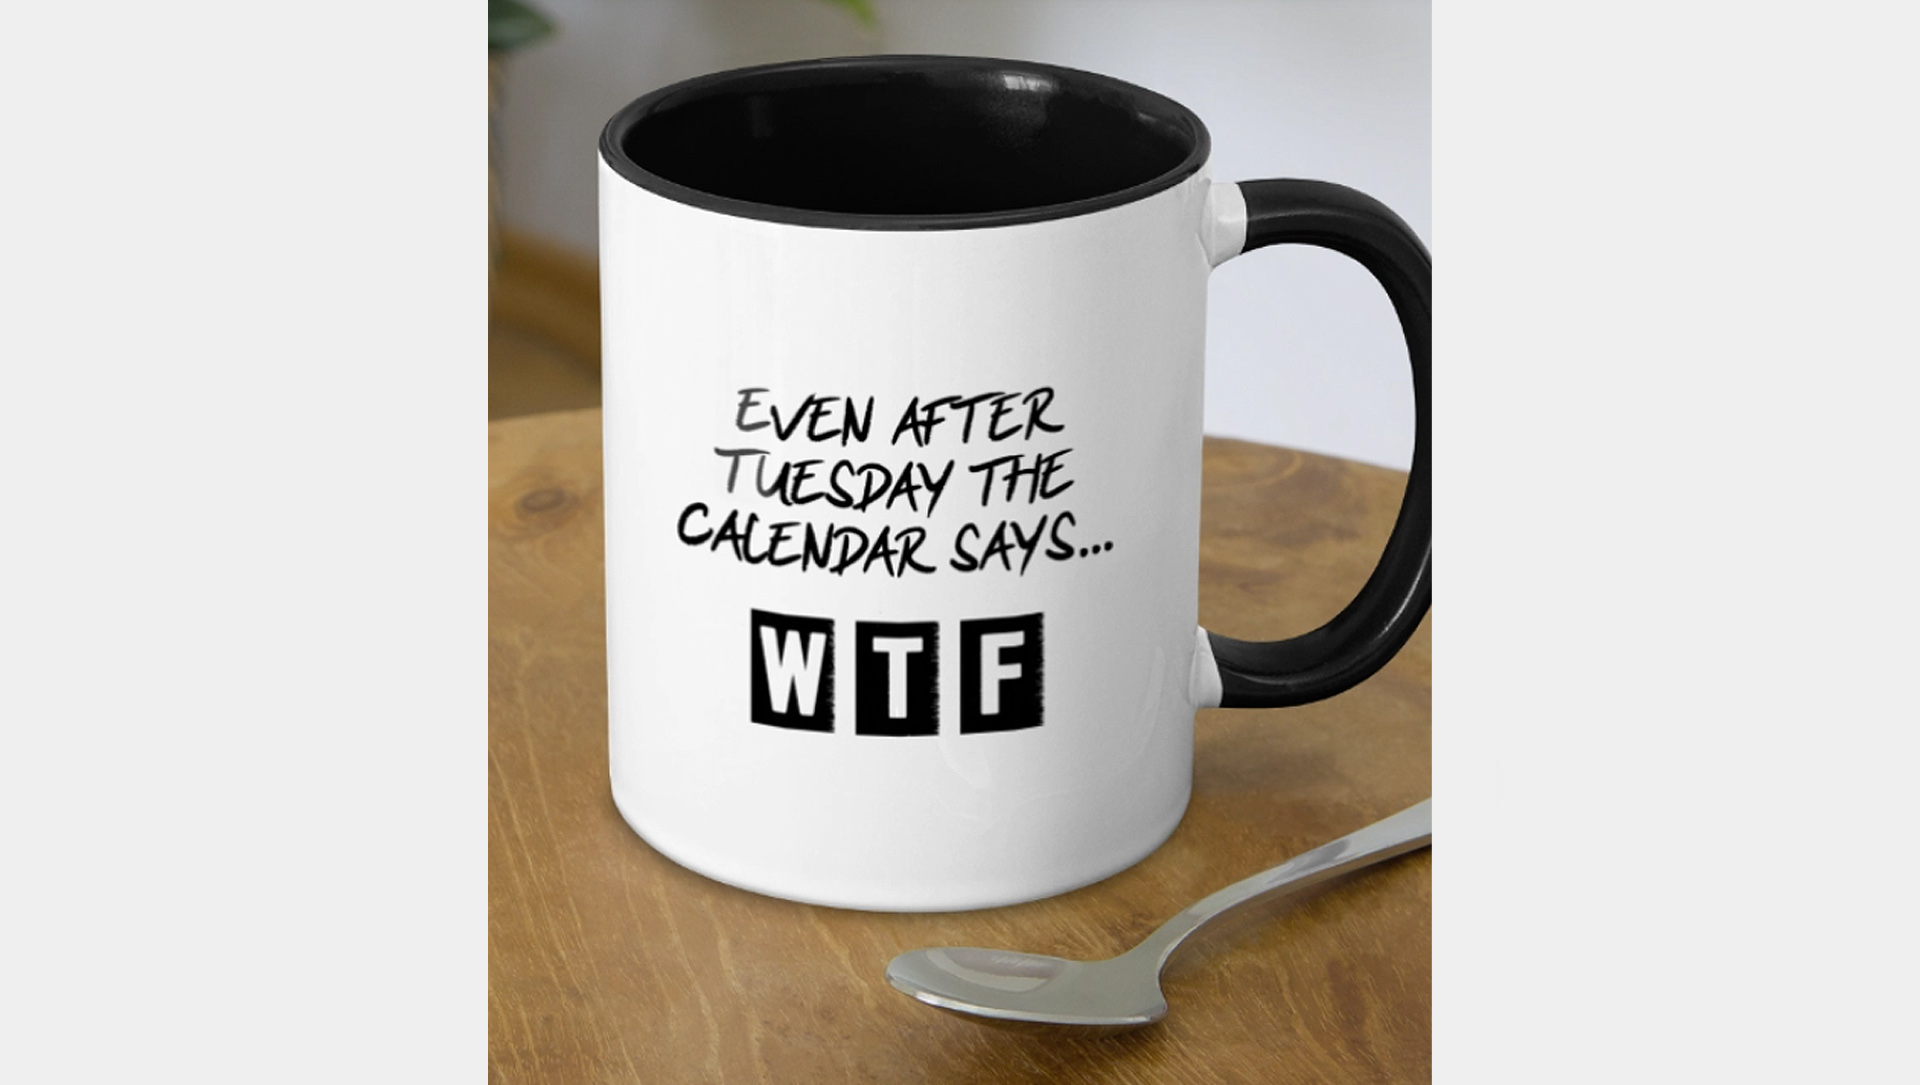 Even after Tuesday the calendar says WTF mug